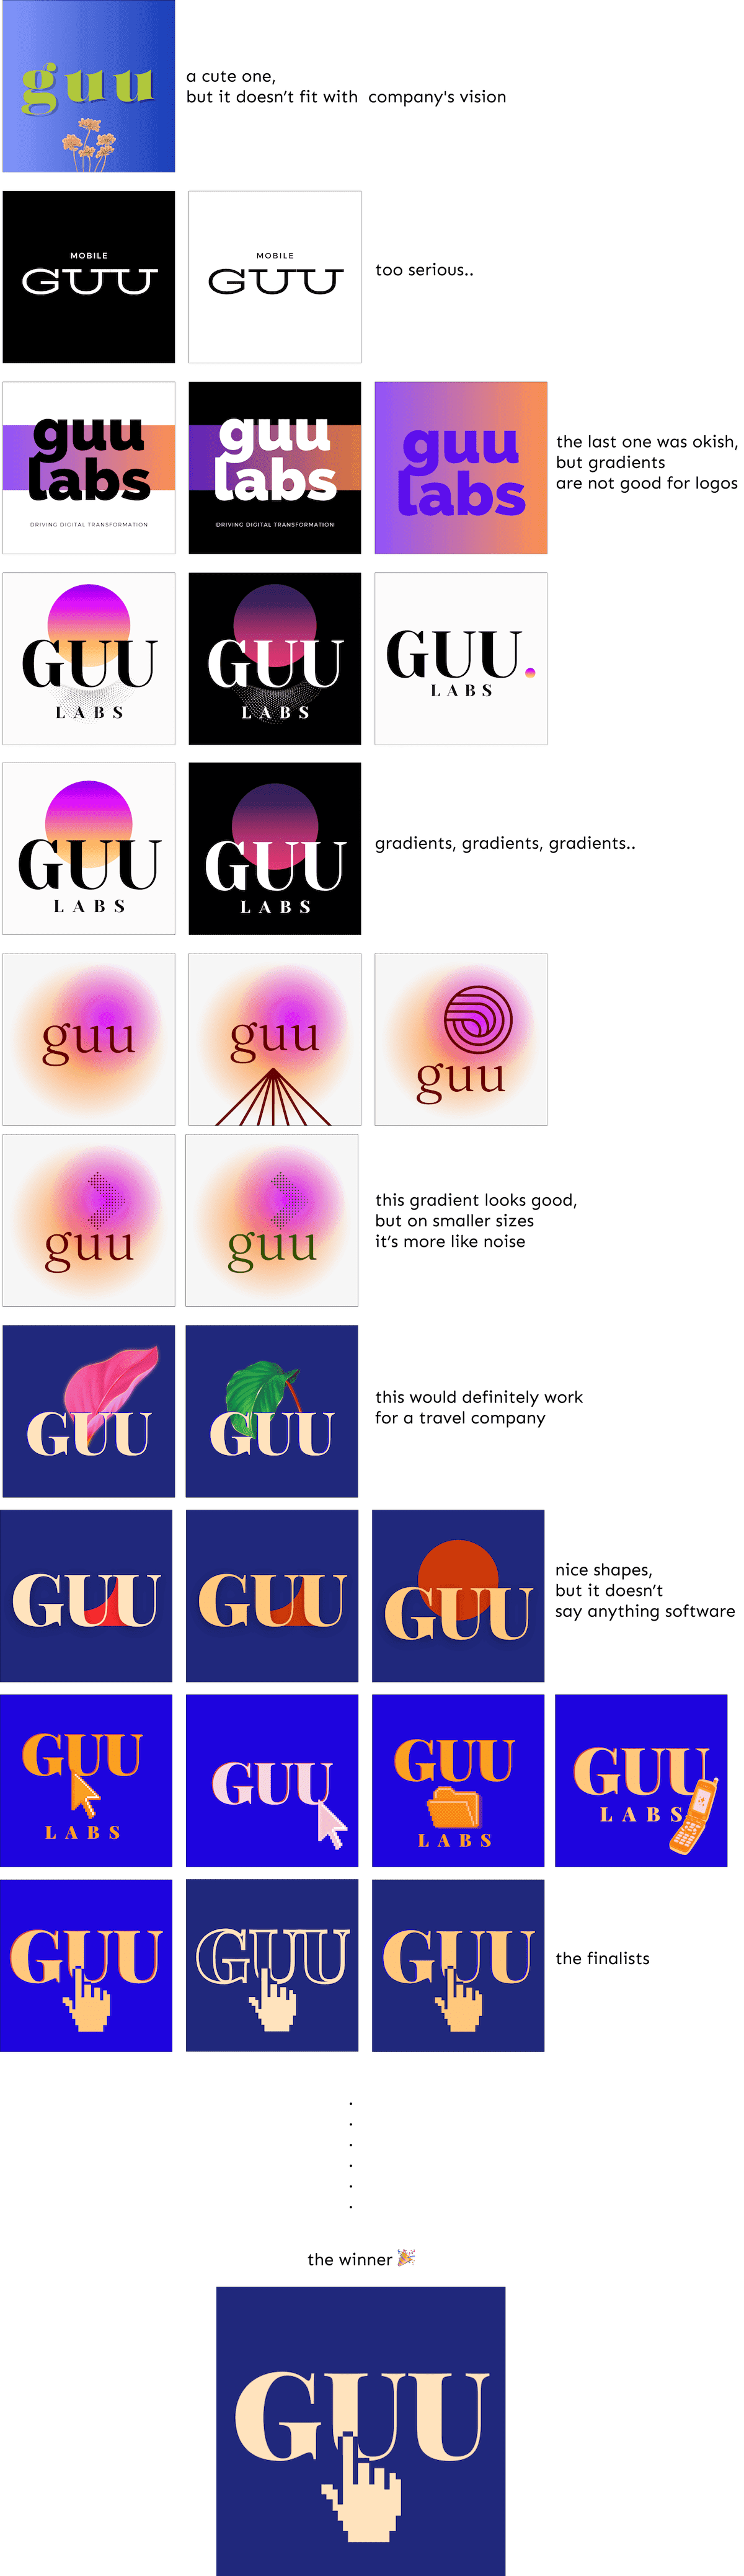 guu labs logos